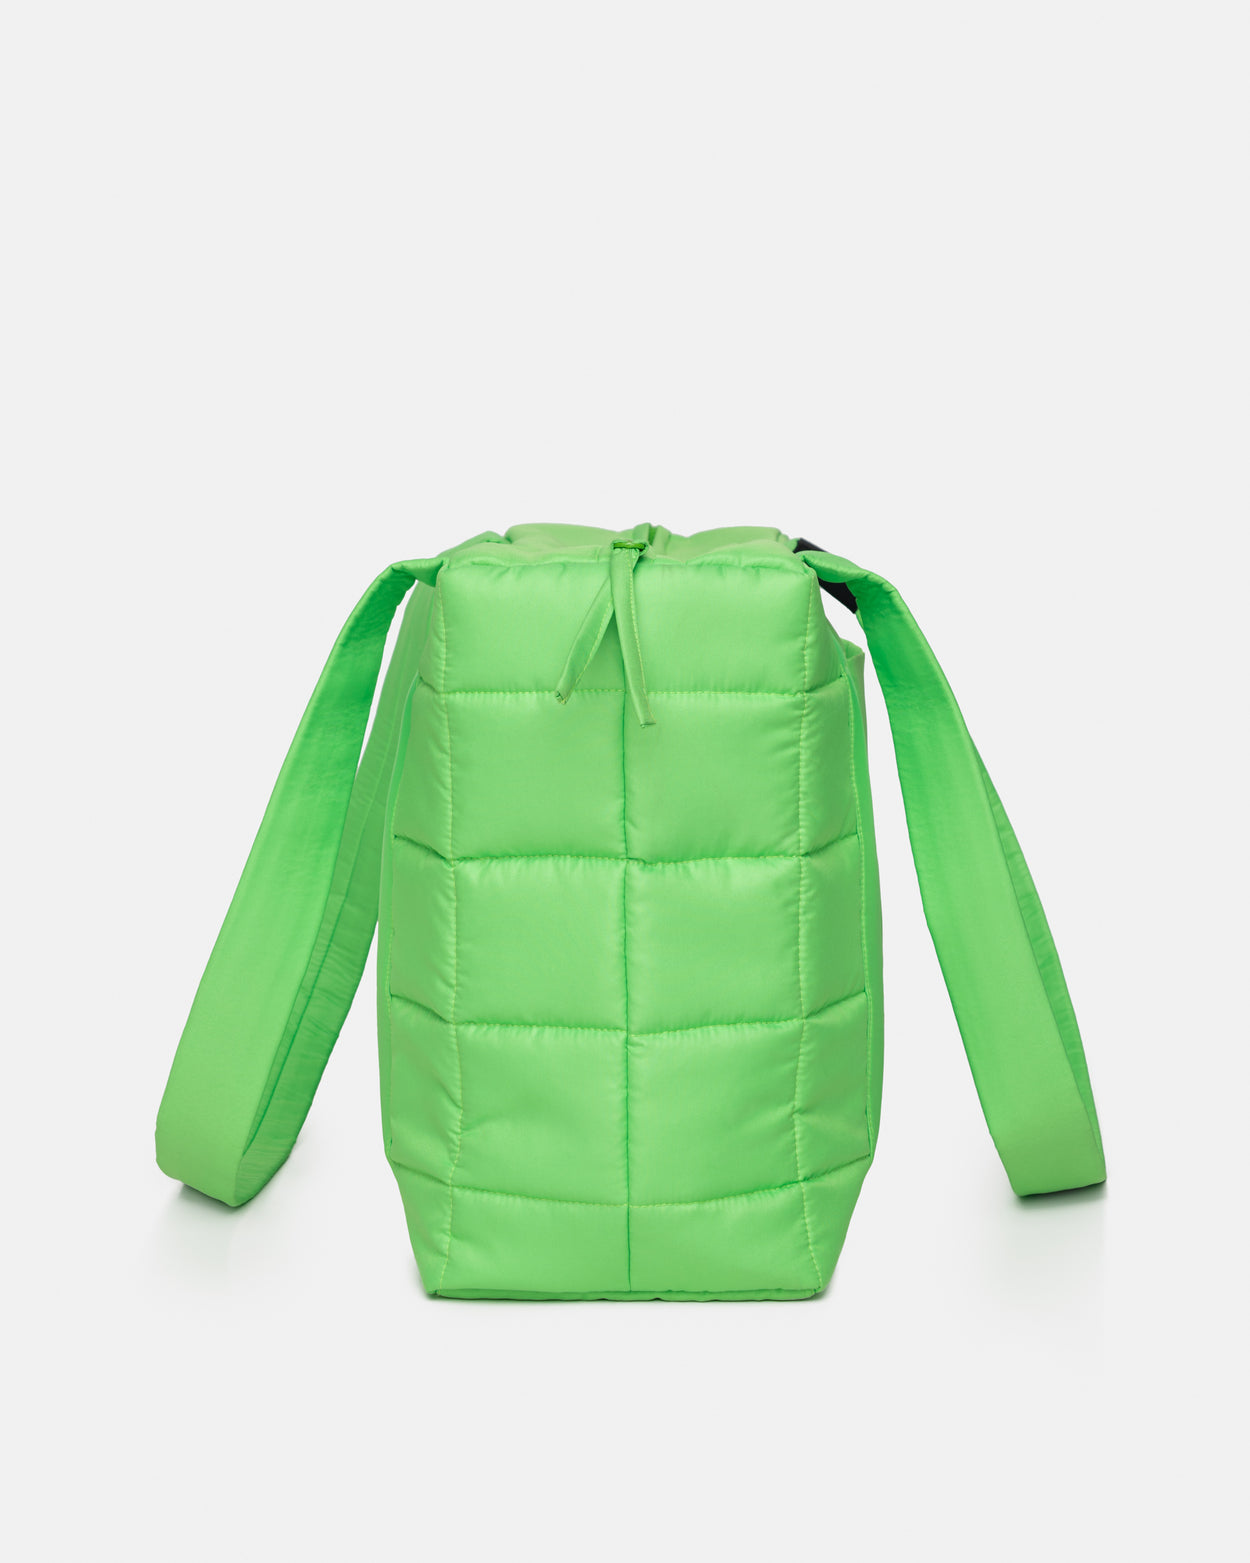 Green Midi Puffer Bag